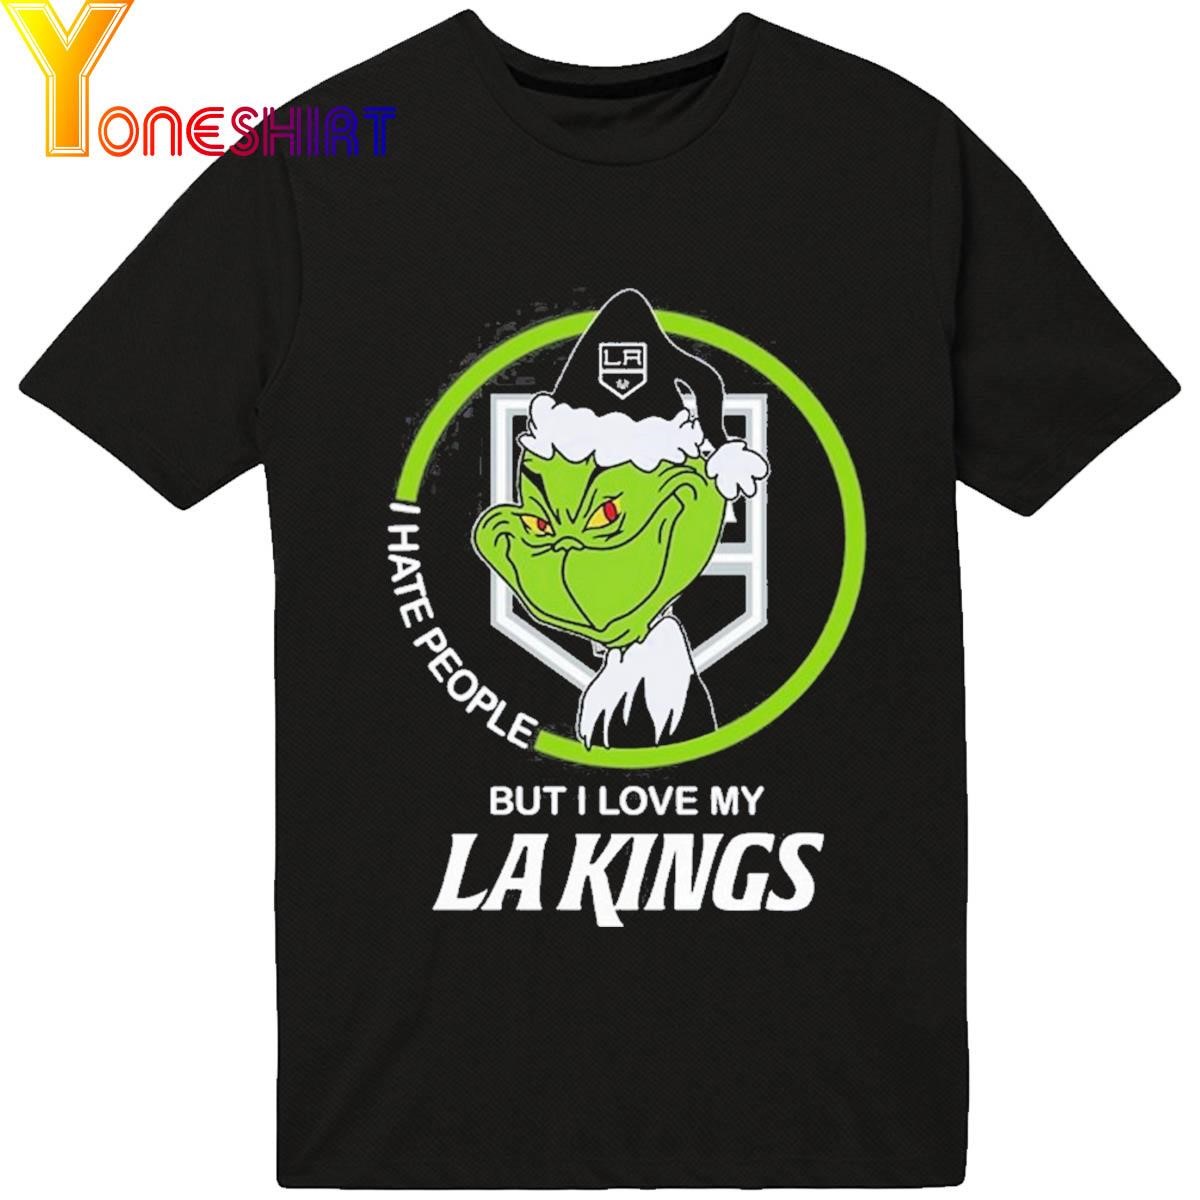 Grinch I Hate People But I Love My LA Kings Shirt